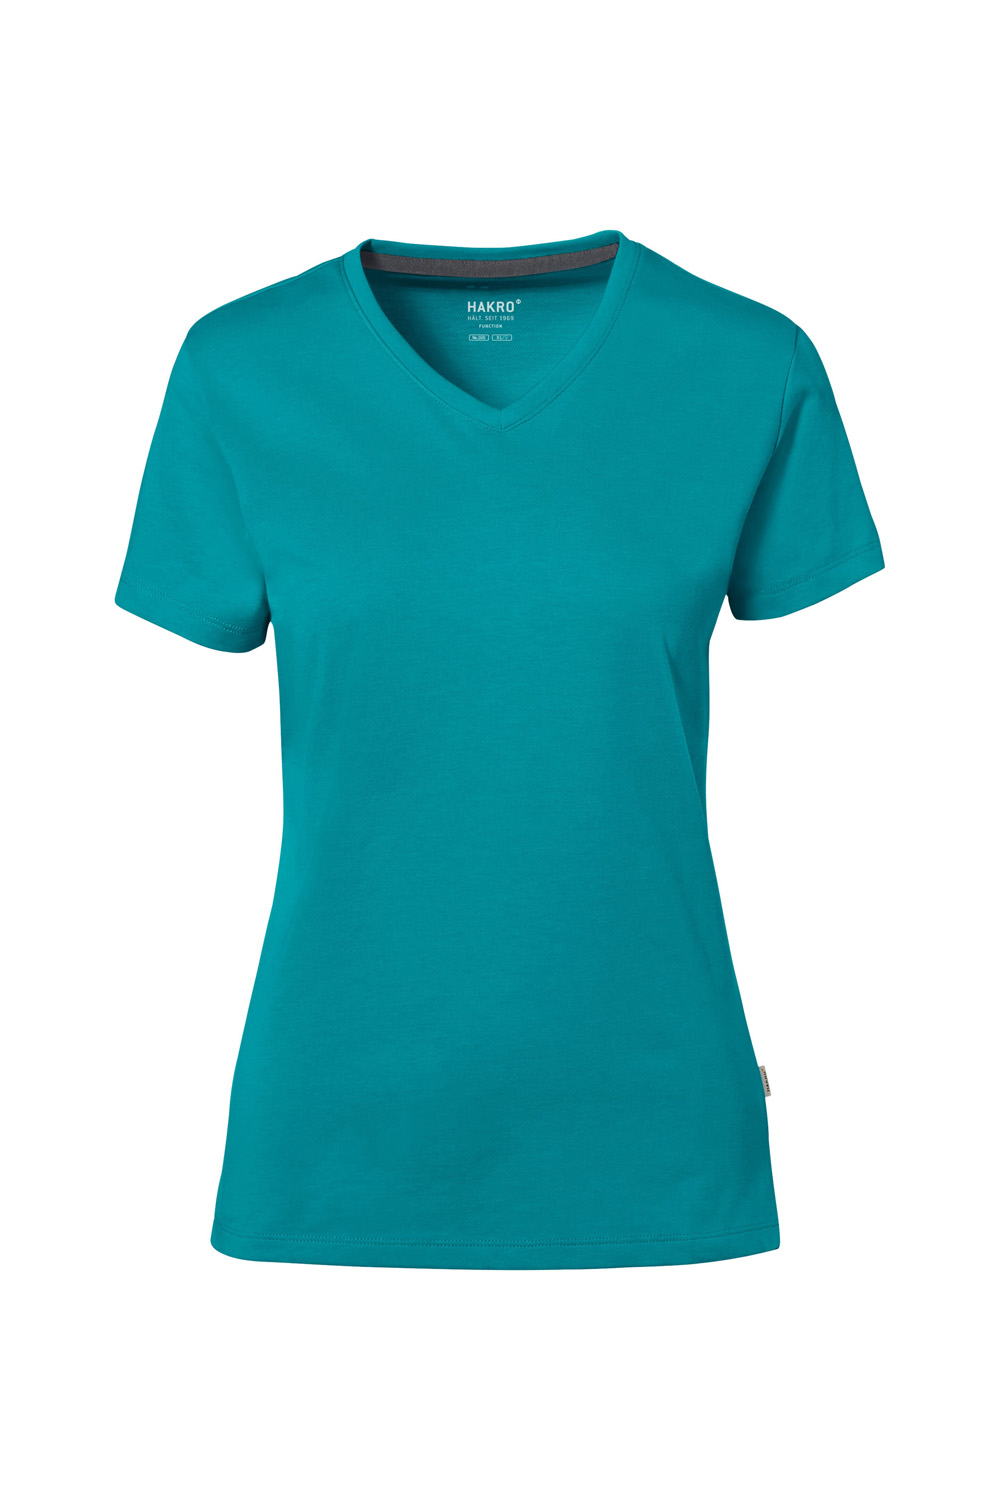 Damen T-Shirt V-Neck kurzarm Hakro Cotton Tec 169 smaragd 012